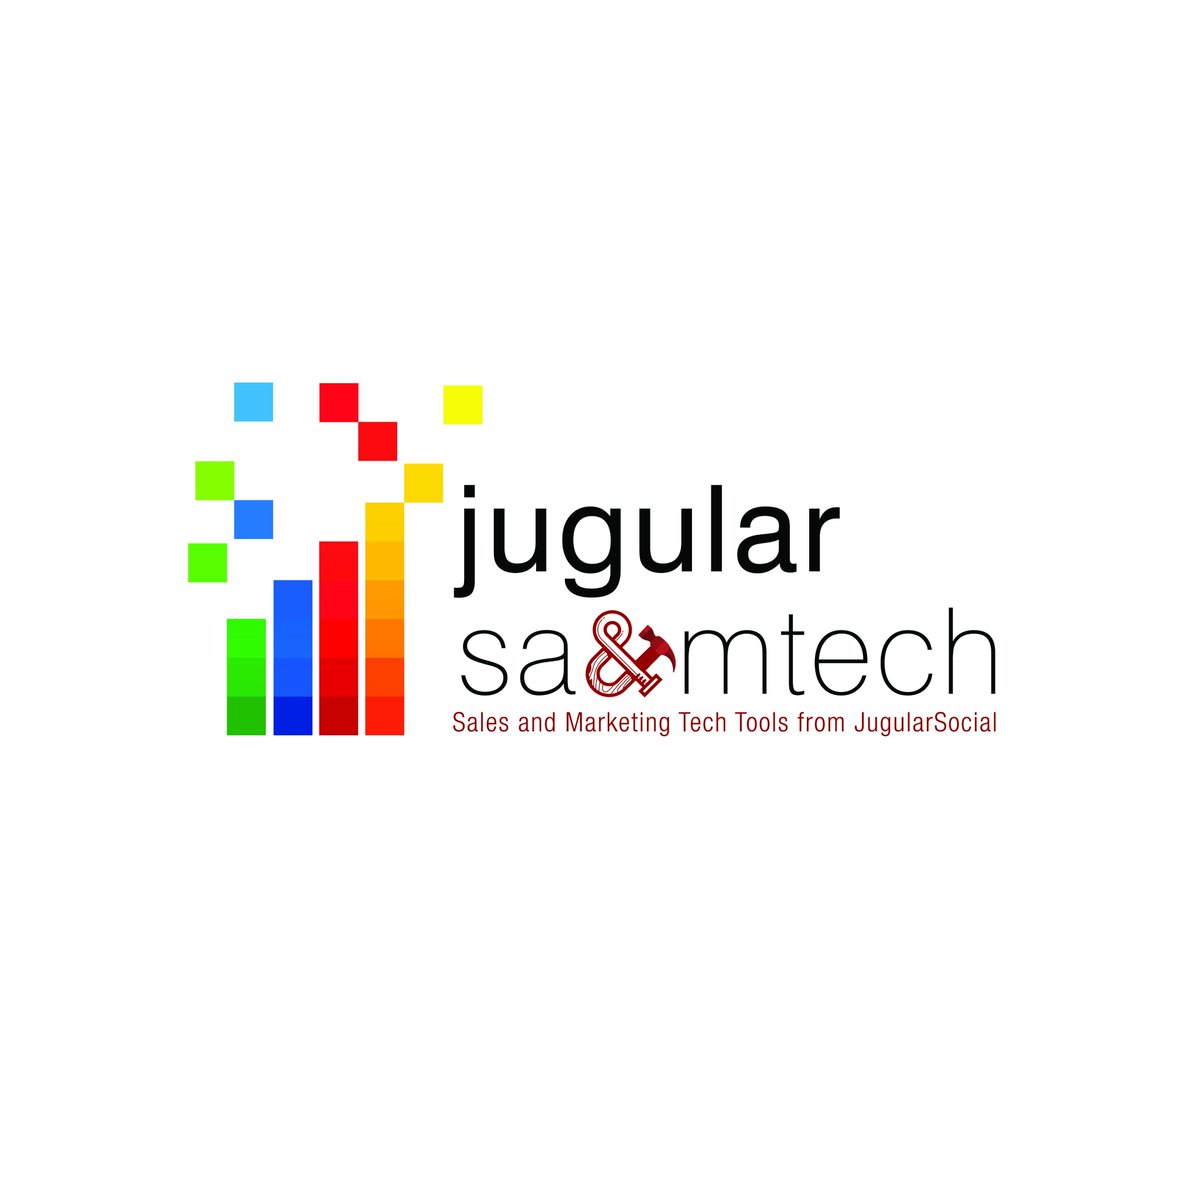 Samtech Hashtag On Twitter - jugularsocial digitalbusinessdepartment marketingrecipes marktech innovationpic twitter com nev8v8igaq